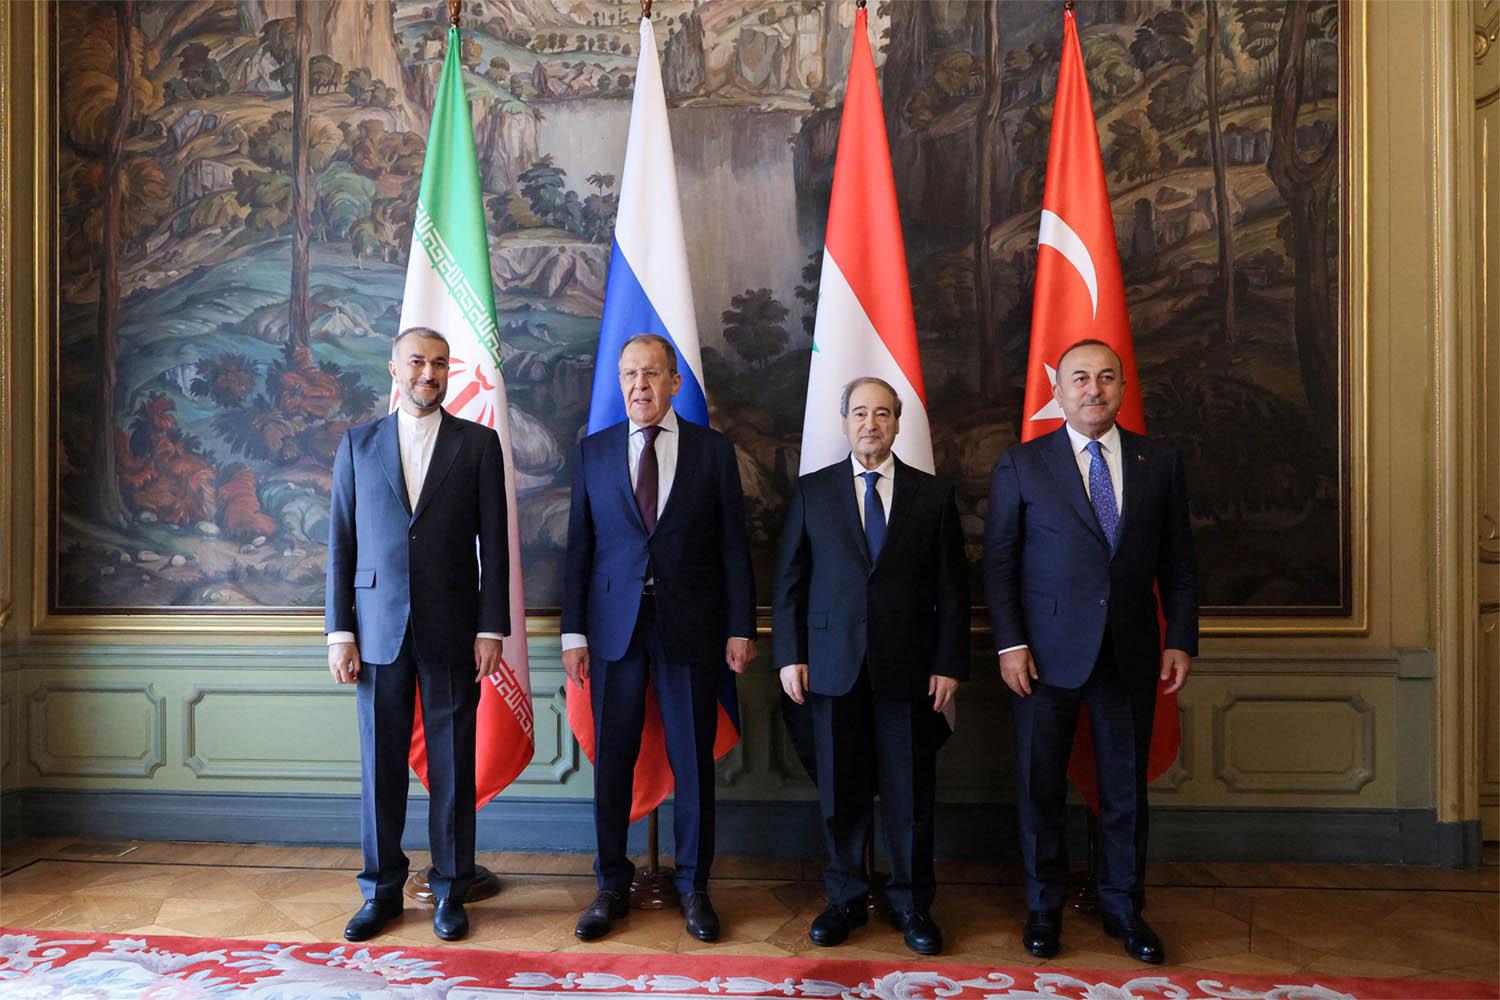 oreign ministers Hossein Amirabdollahian of Iran, Sergei Lavrov of Russia, Faisal Mekdad of Syria and Mevlut Cavusoglu of Turkey